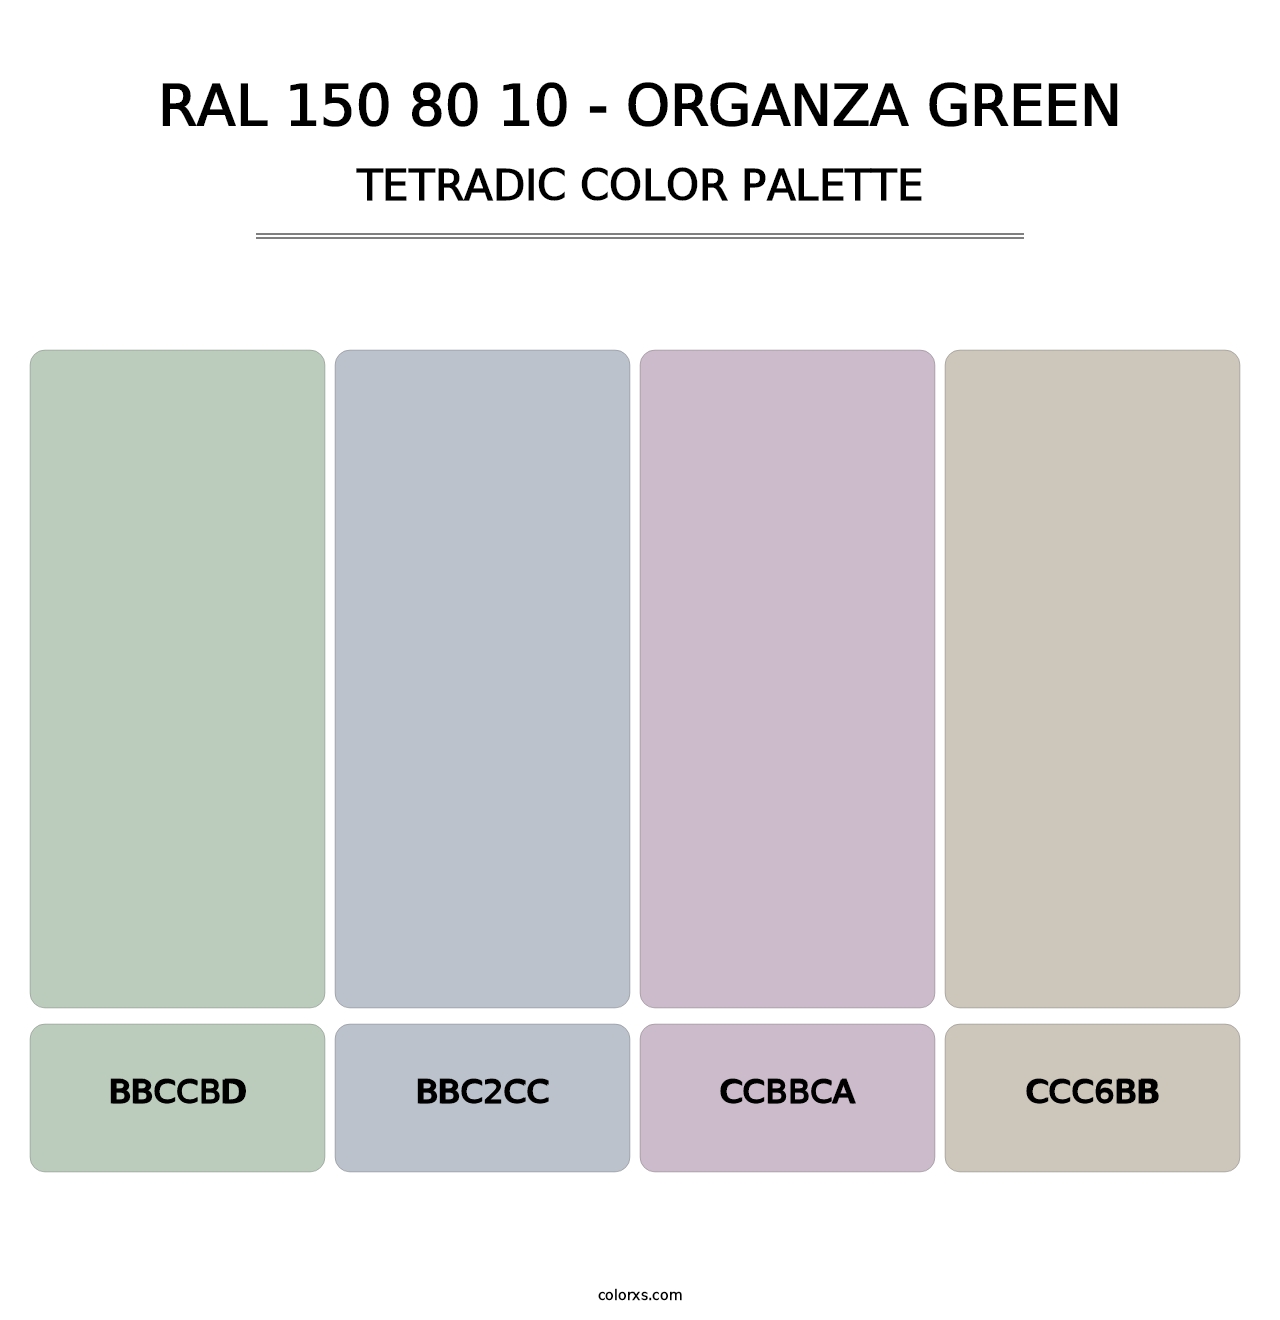 RAL 150 80 10 - Organza Green - Tetradic Color Palette